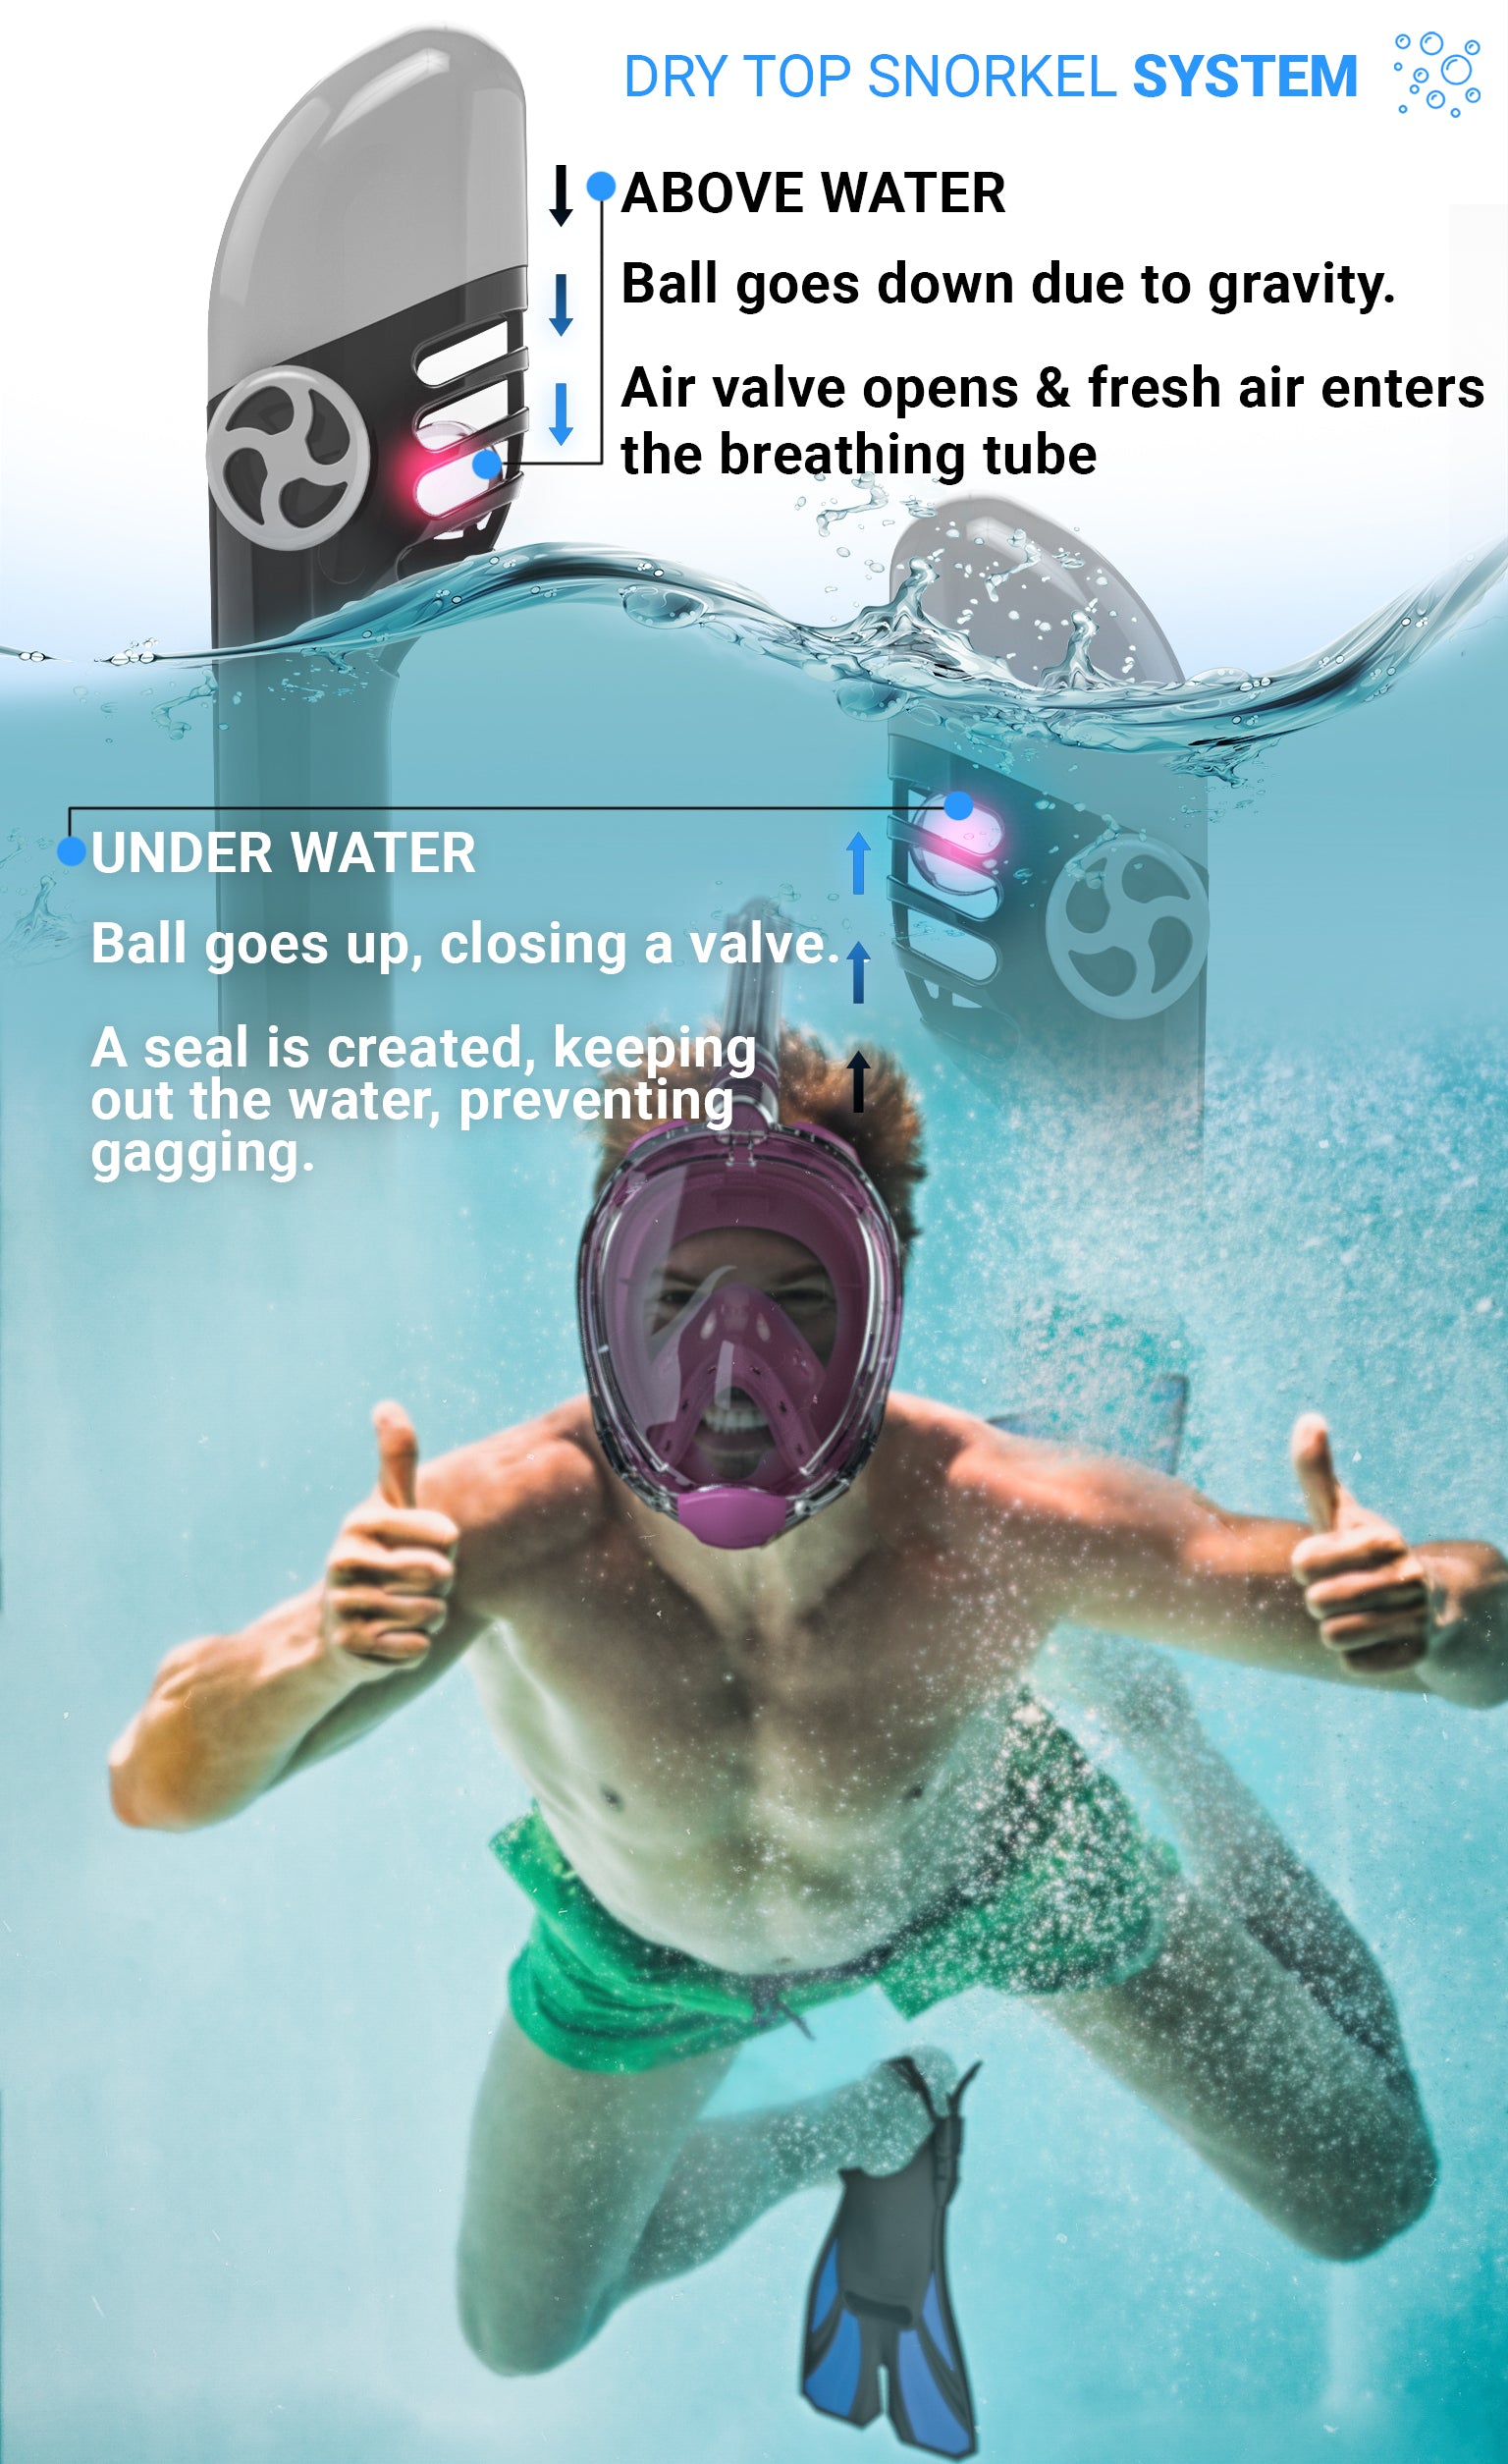 Snorkel Set Adult (Pink) - Full Face Mask and Adjustable Swim Fins, 180° Panoramic View, Anti Fog and Anti Leak